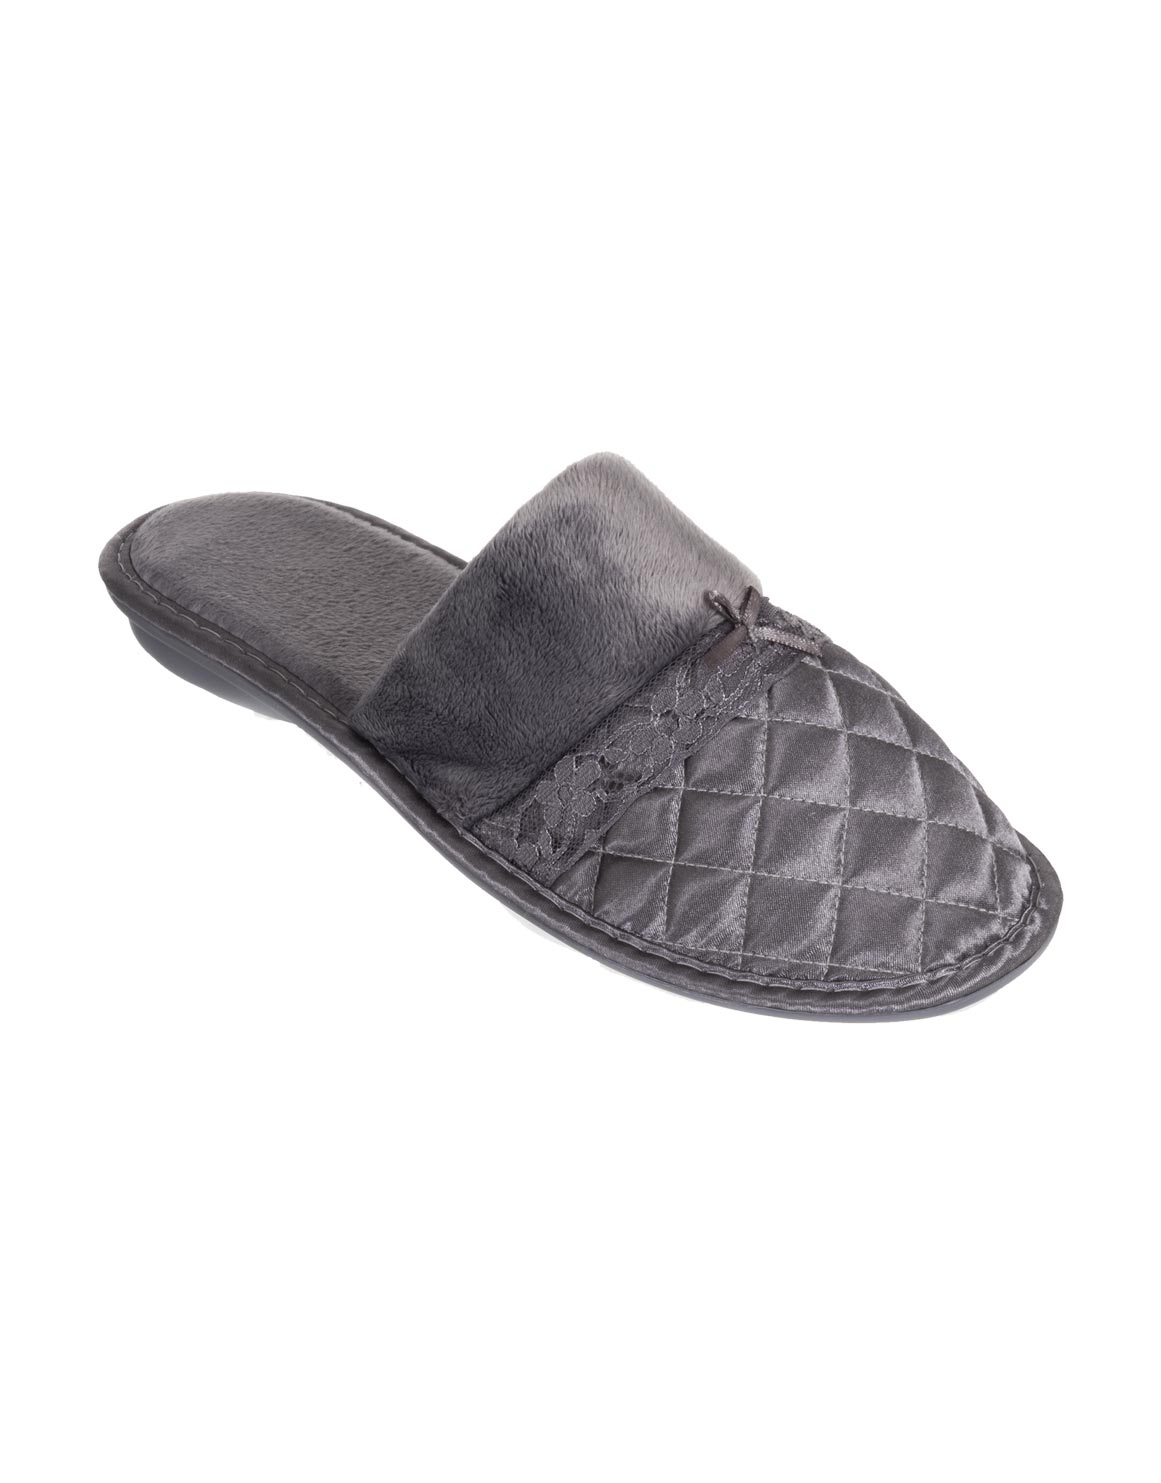 Share 62+ woolworths slippers latest - dedaotaonec